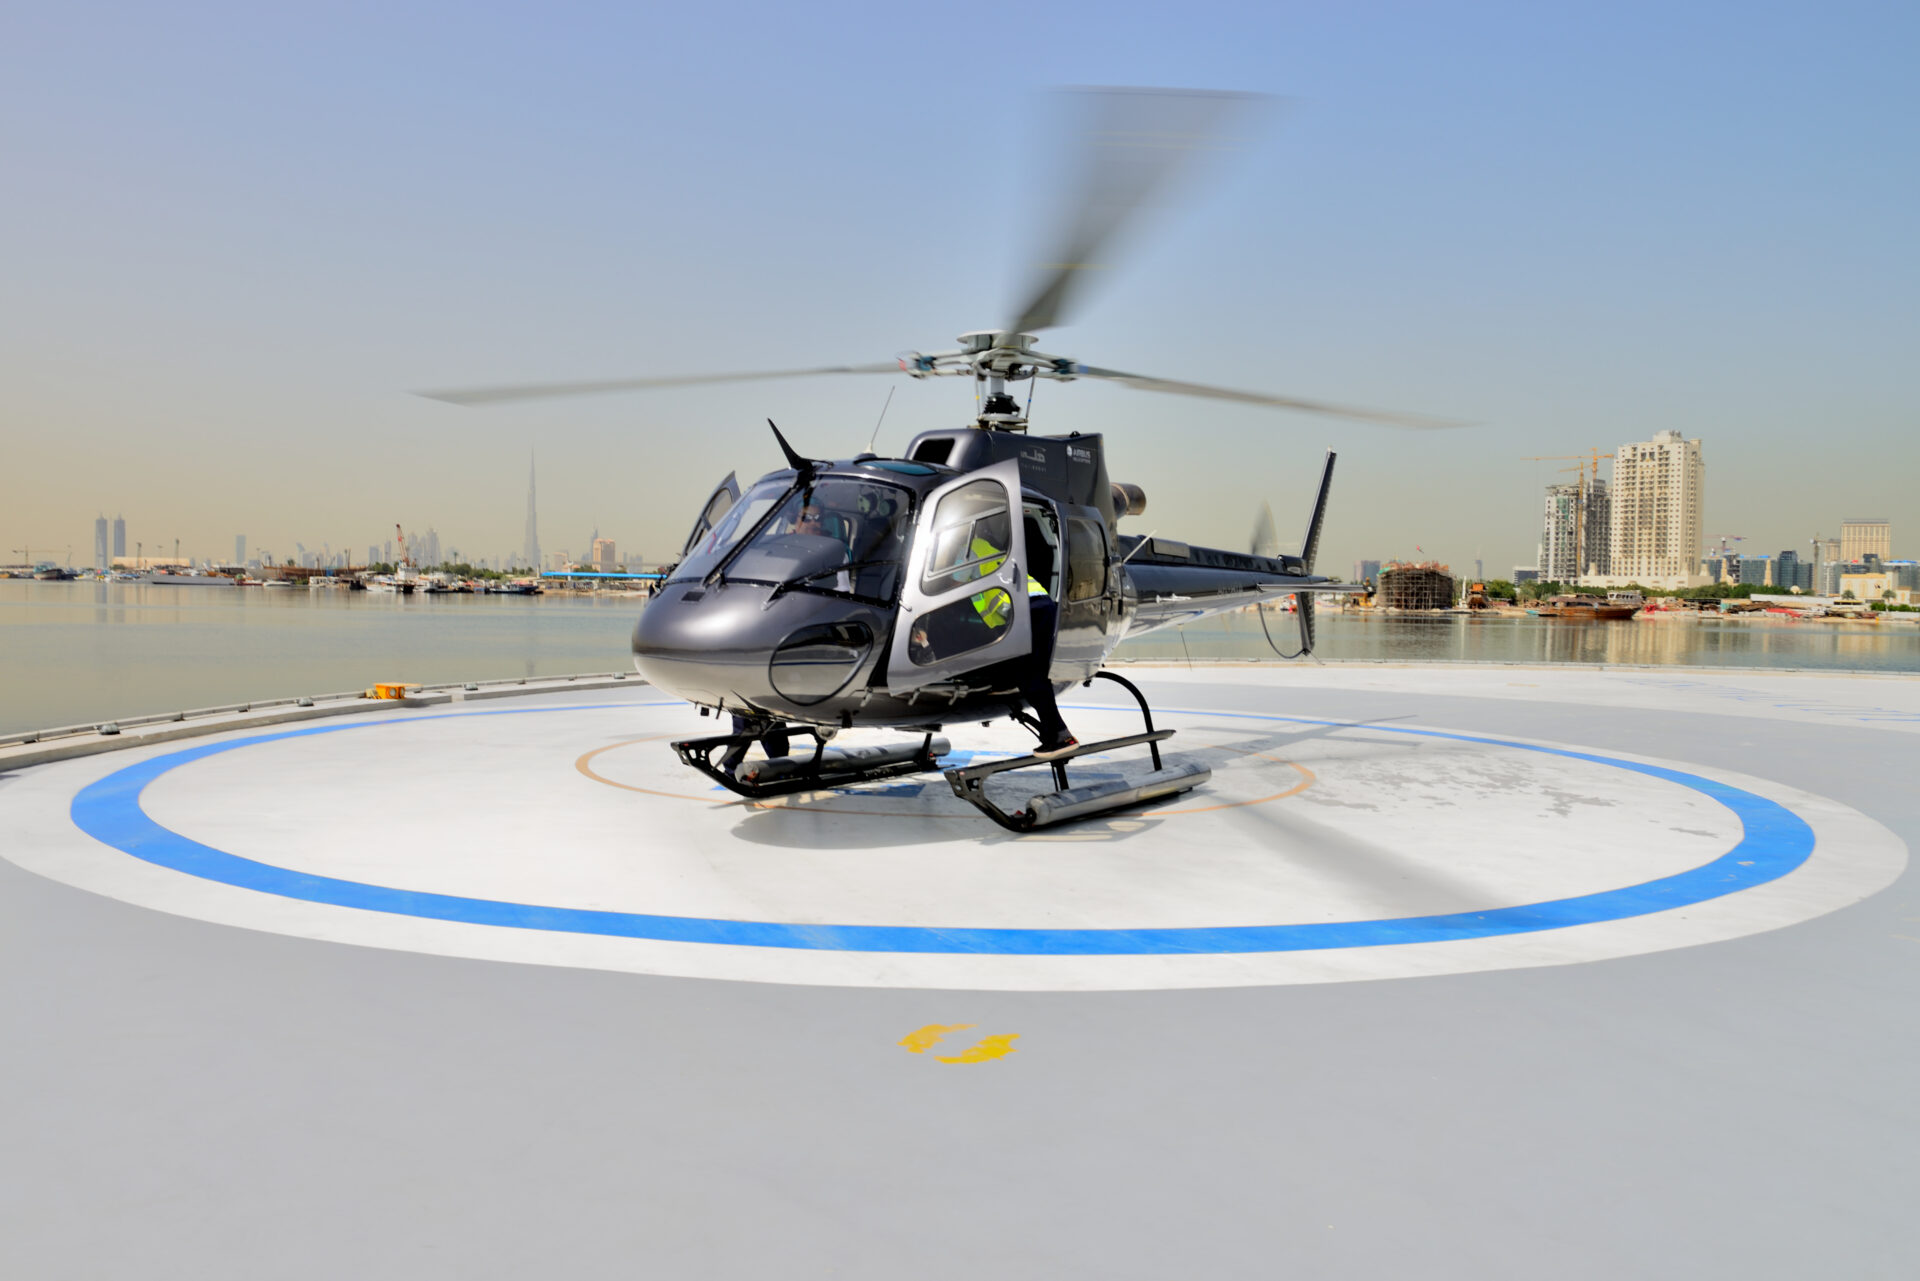 Best Dubai helicopter tours - Helipad